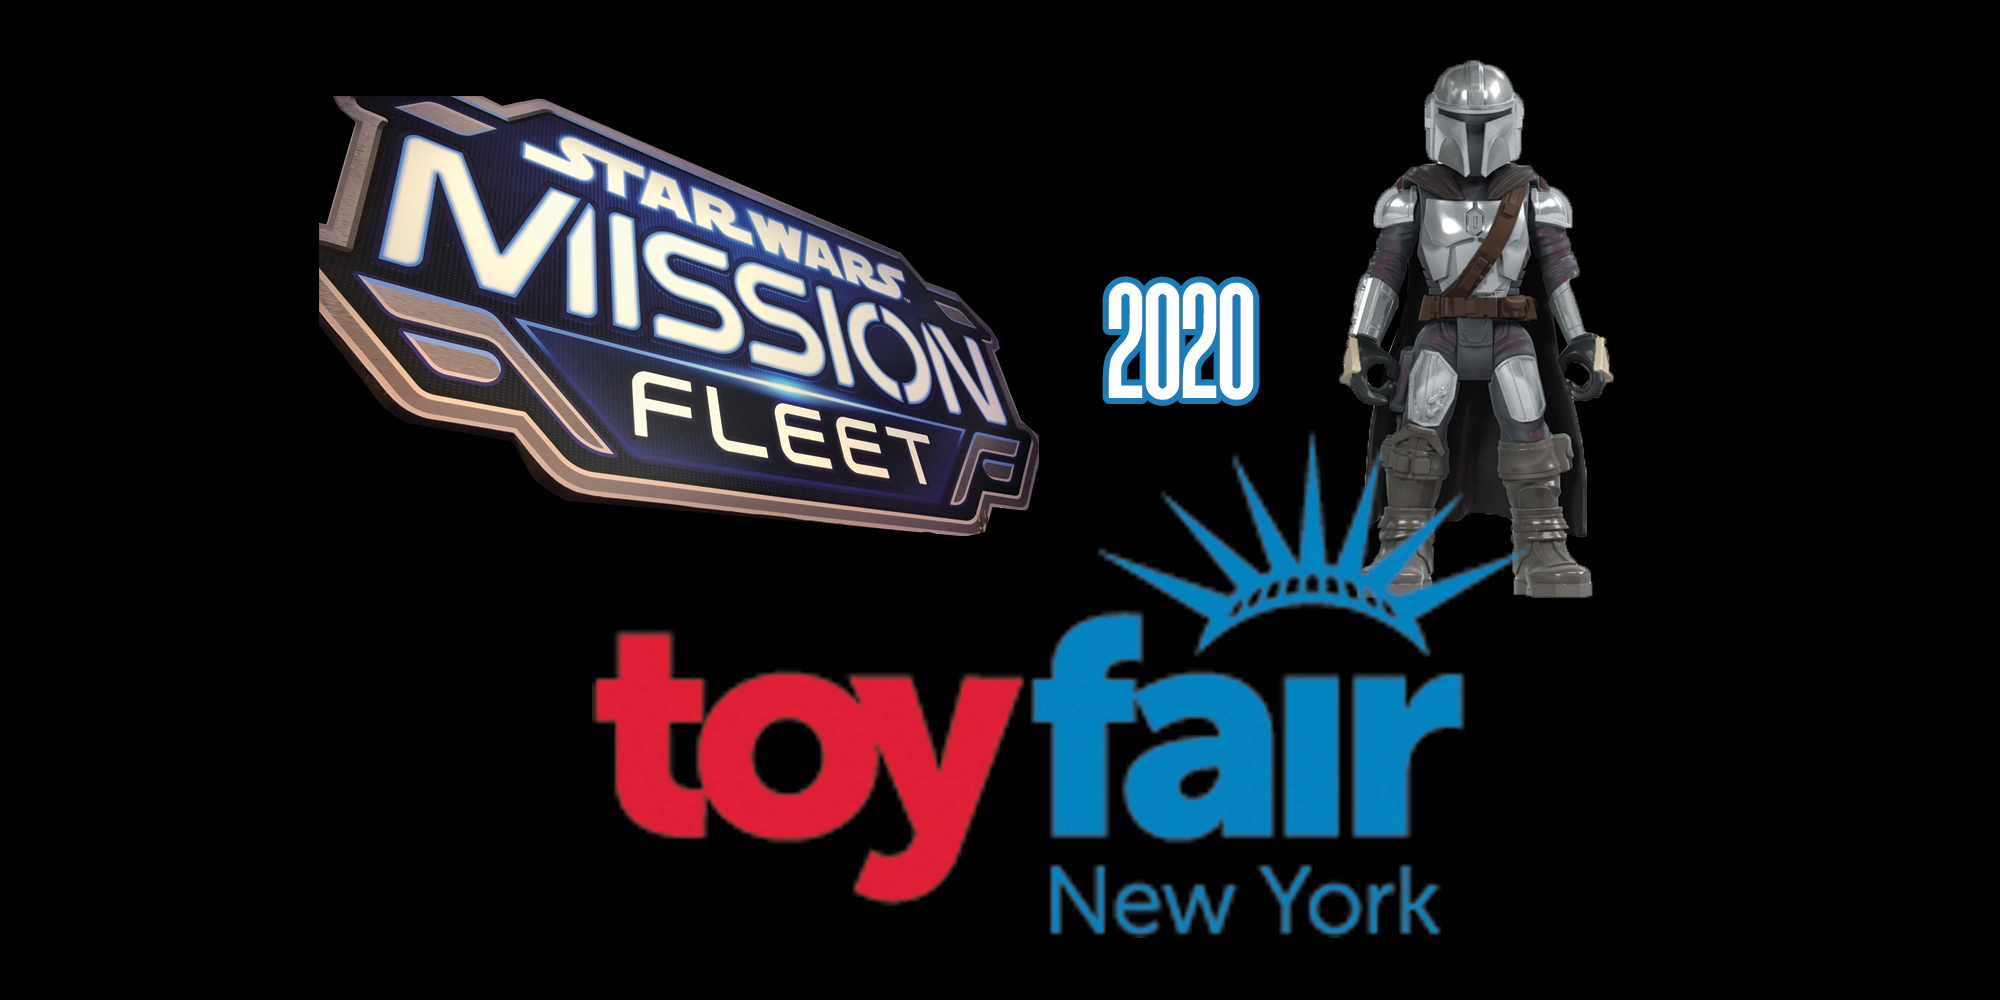 New York Toy Fair 2020: Mission Fleet